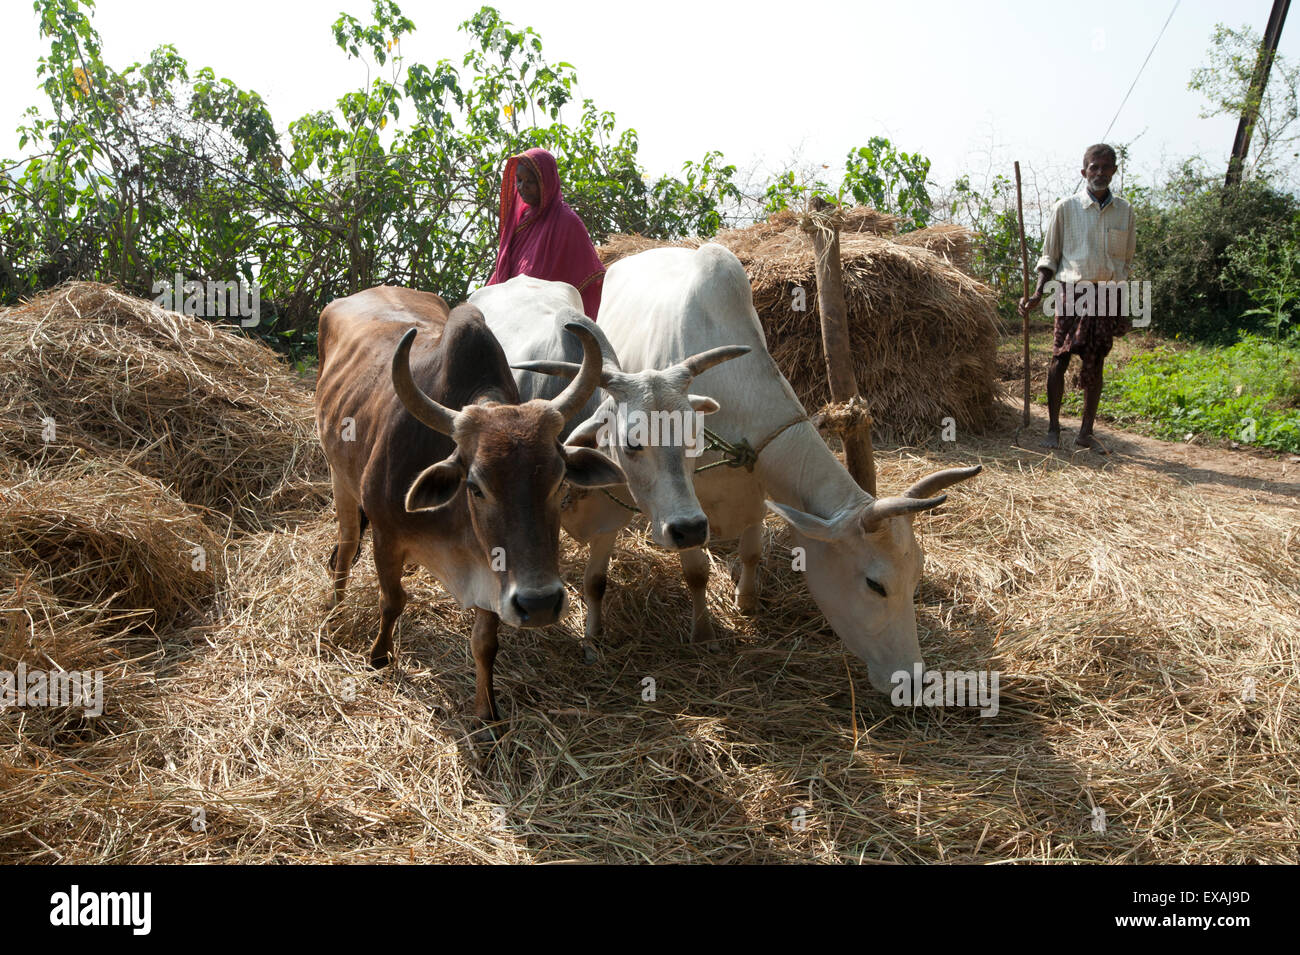 Wife in pink sari, husband behind, driving three cows around pole to thresh harvested rice crop, Dhenkanal, Orissa, India Stock Photo